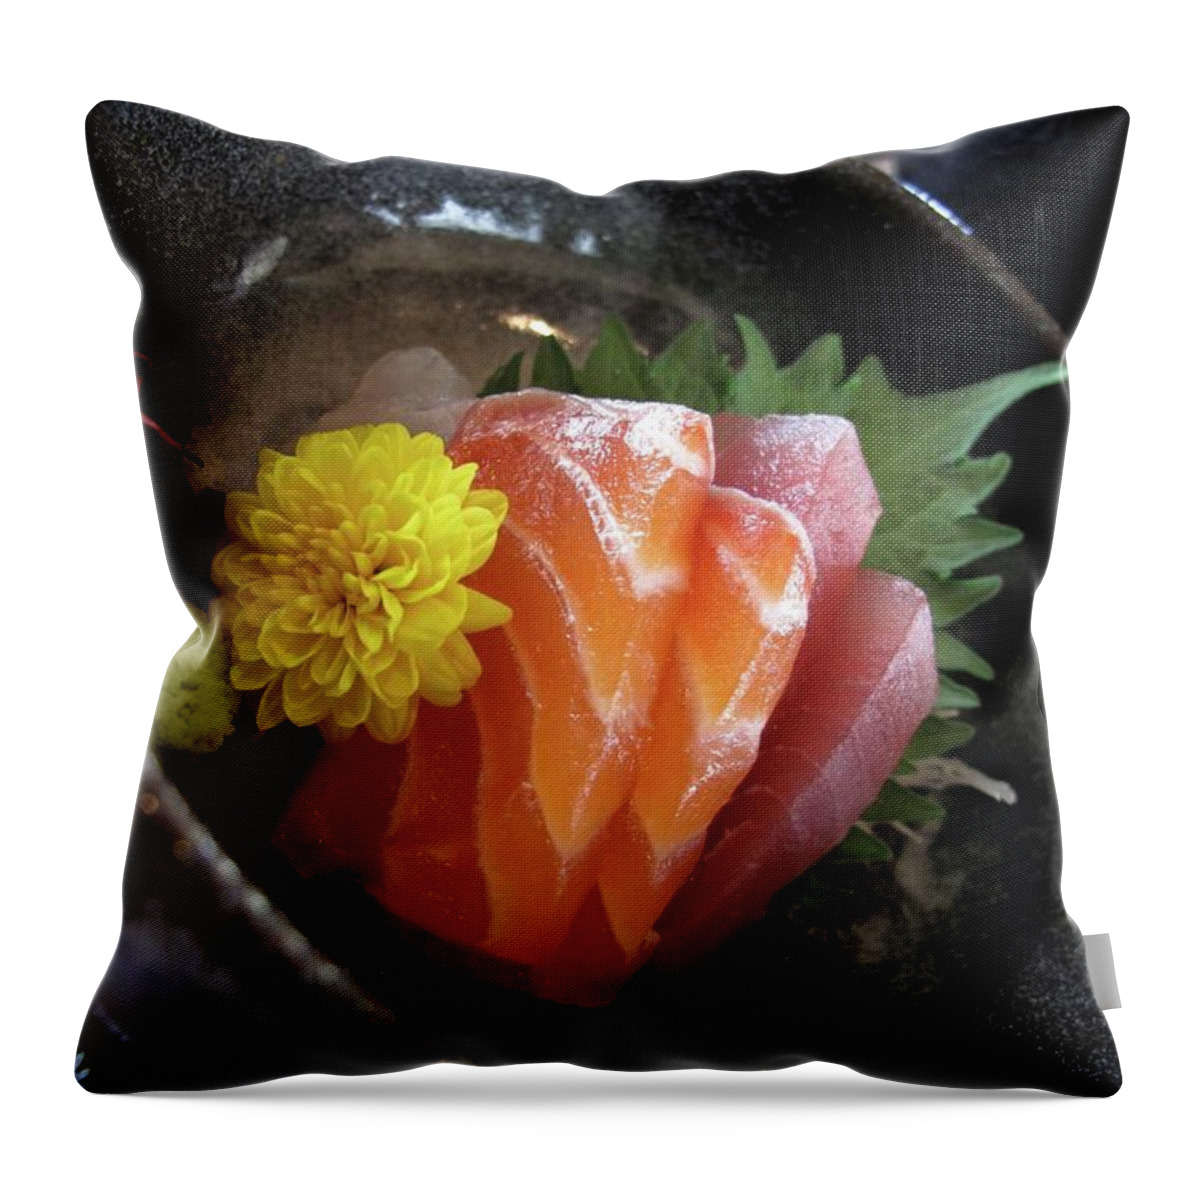 Kyoto Prefecture Throw Pillow featuring the photograph Sashimi For Mi Mi by Josh Liba